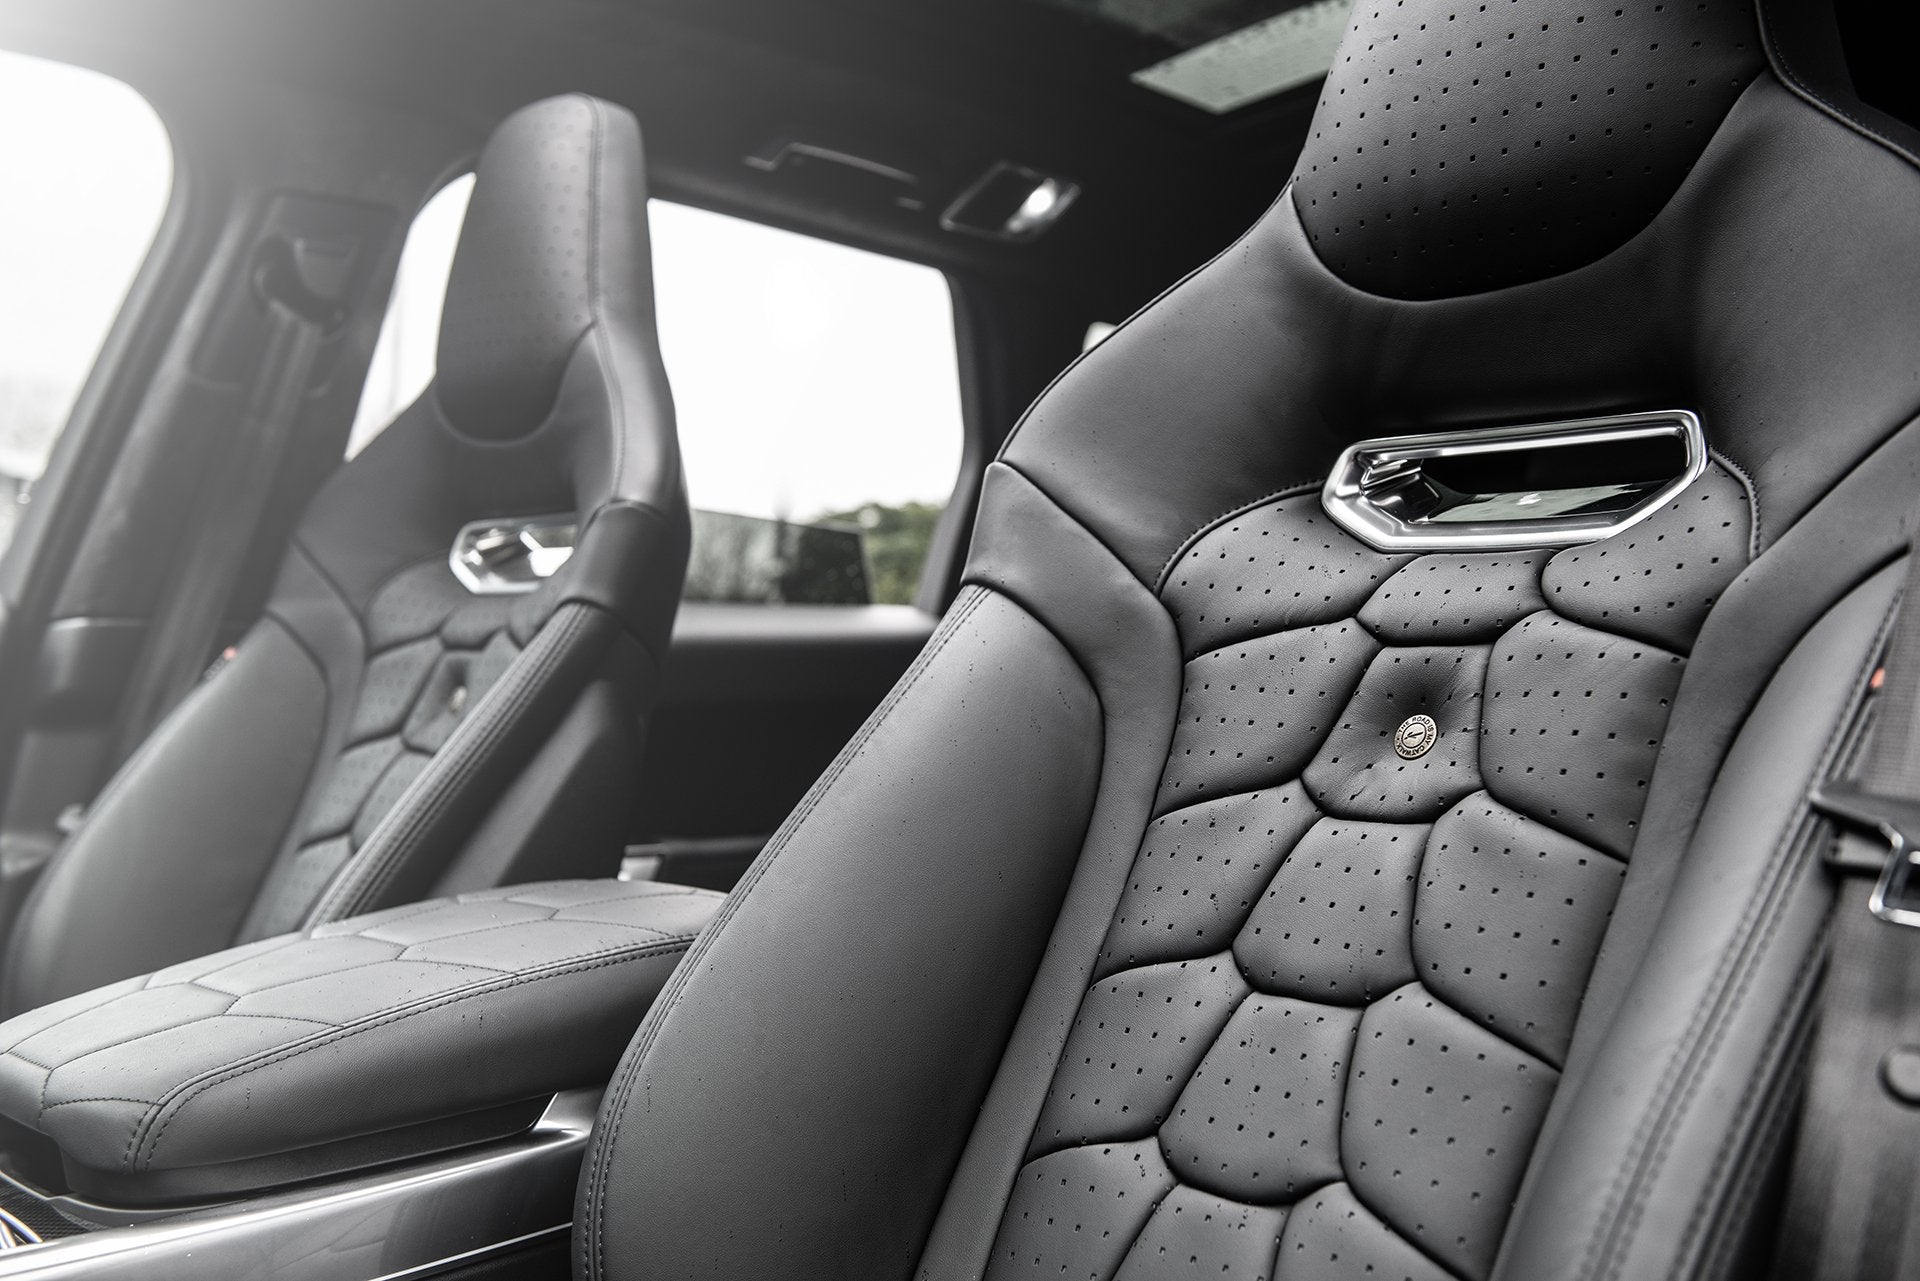 Range Rover SVR Leather Interior